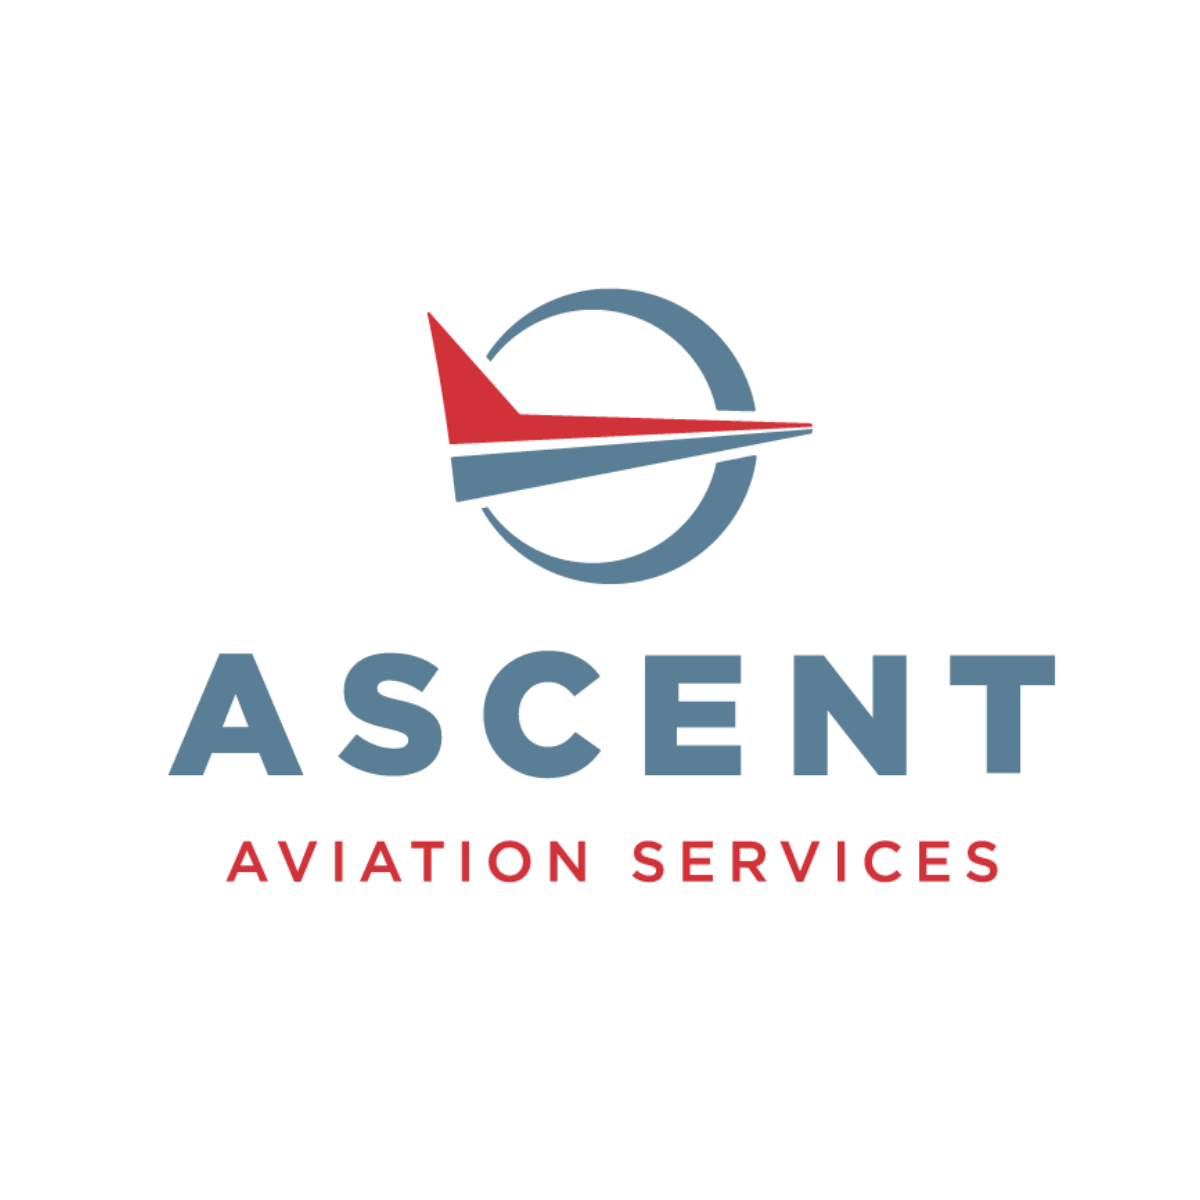 Aviation services. Ascent Aviation Academy Flight School van nuys. Aircraft service Company. Ascent Aviation Academy Flight School van nuys здание. Terrport Aviation services Ltd Company.